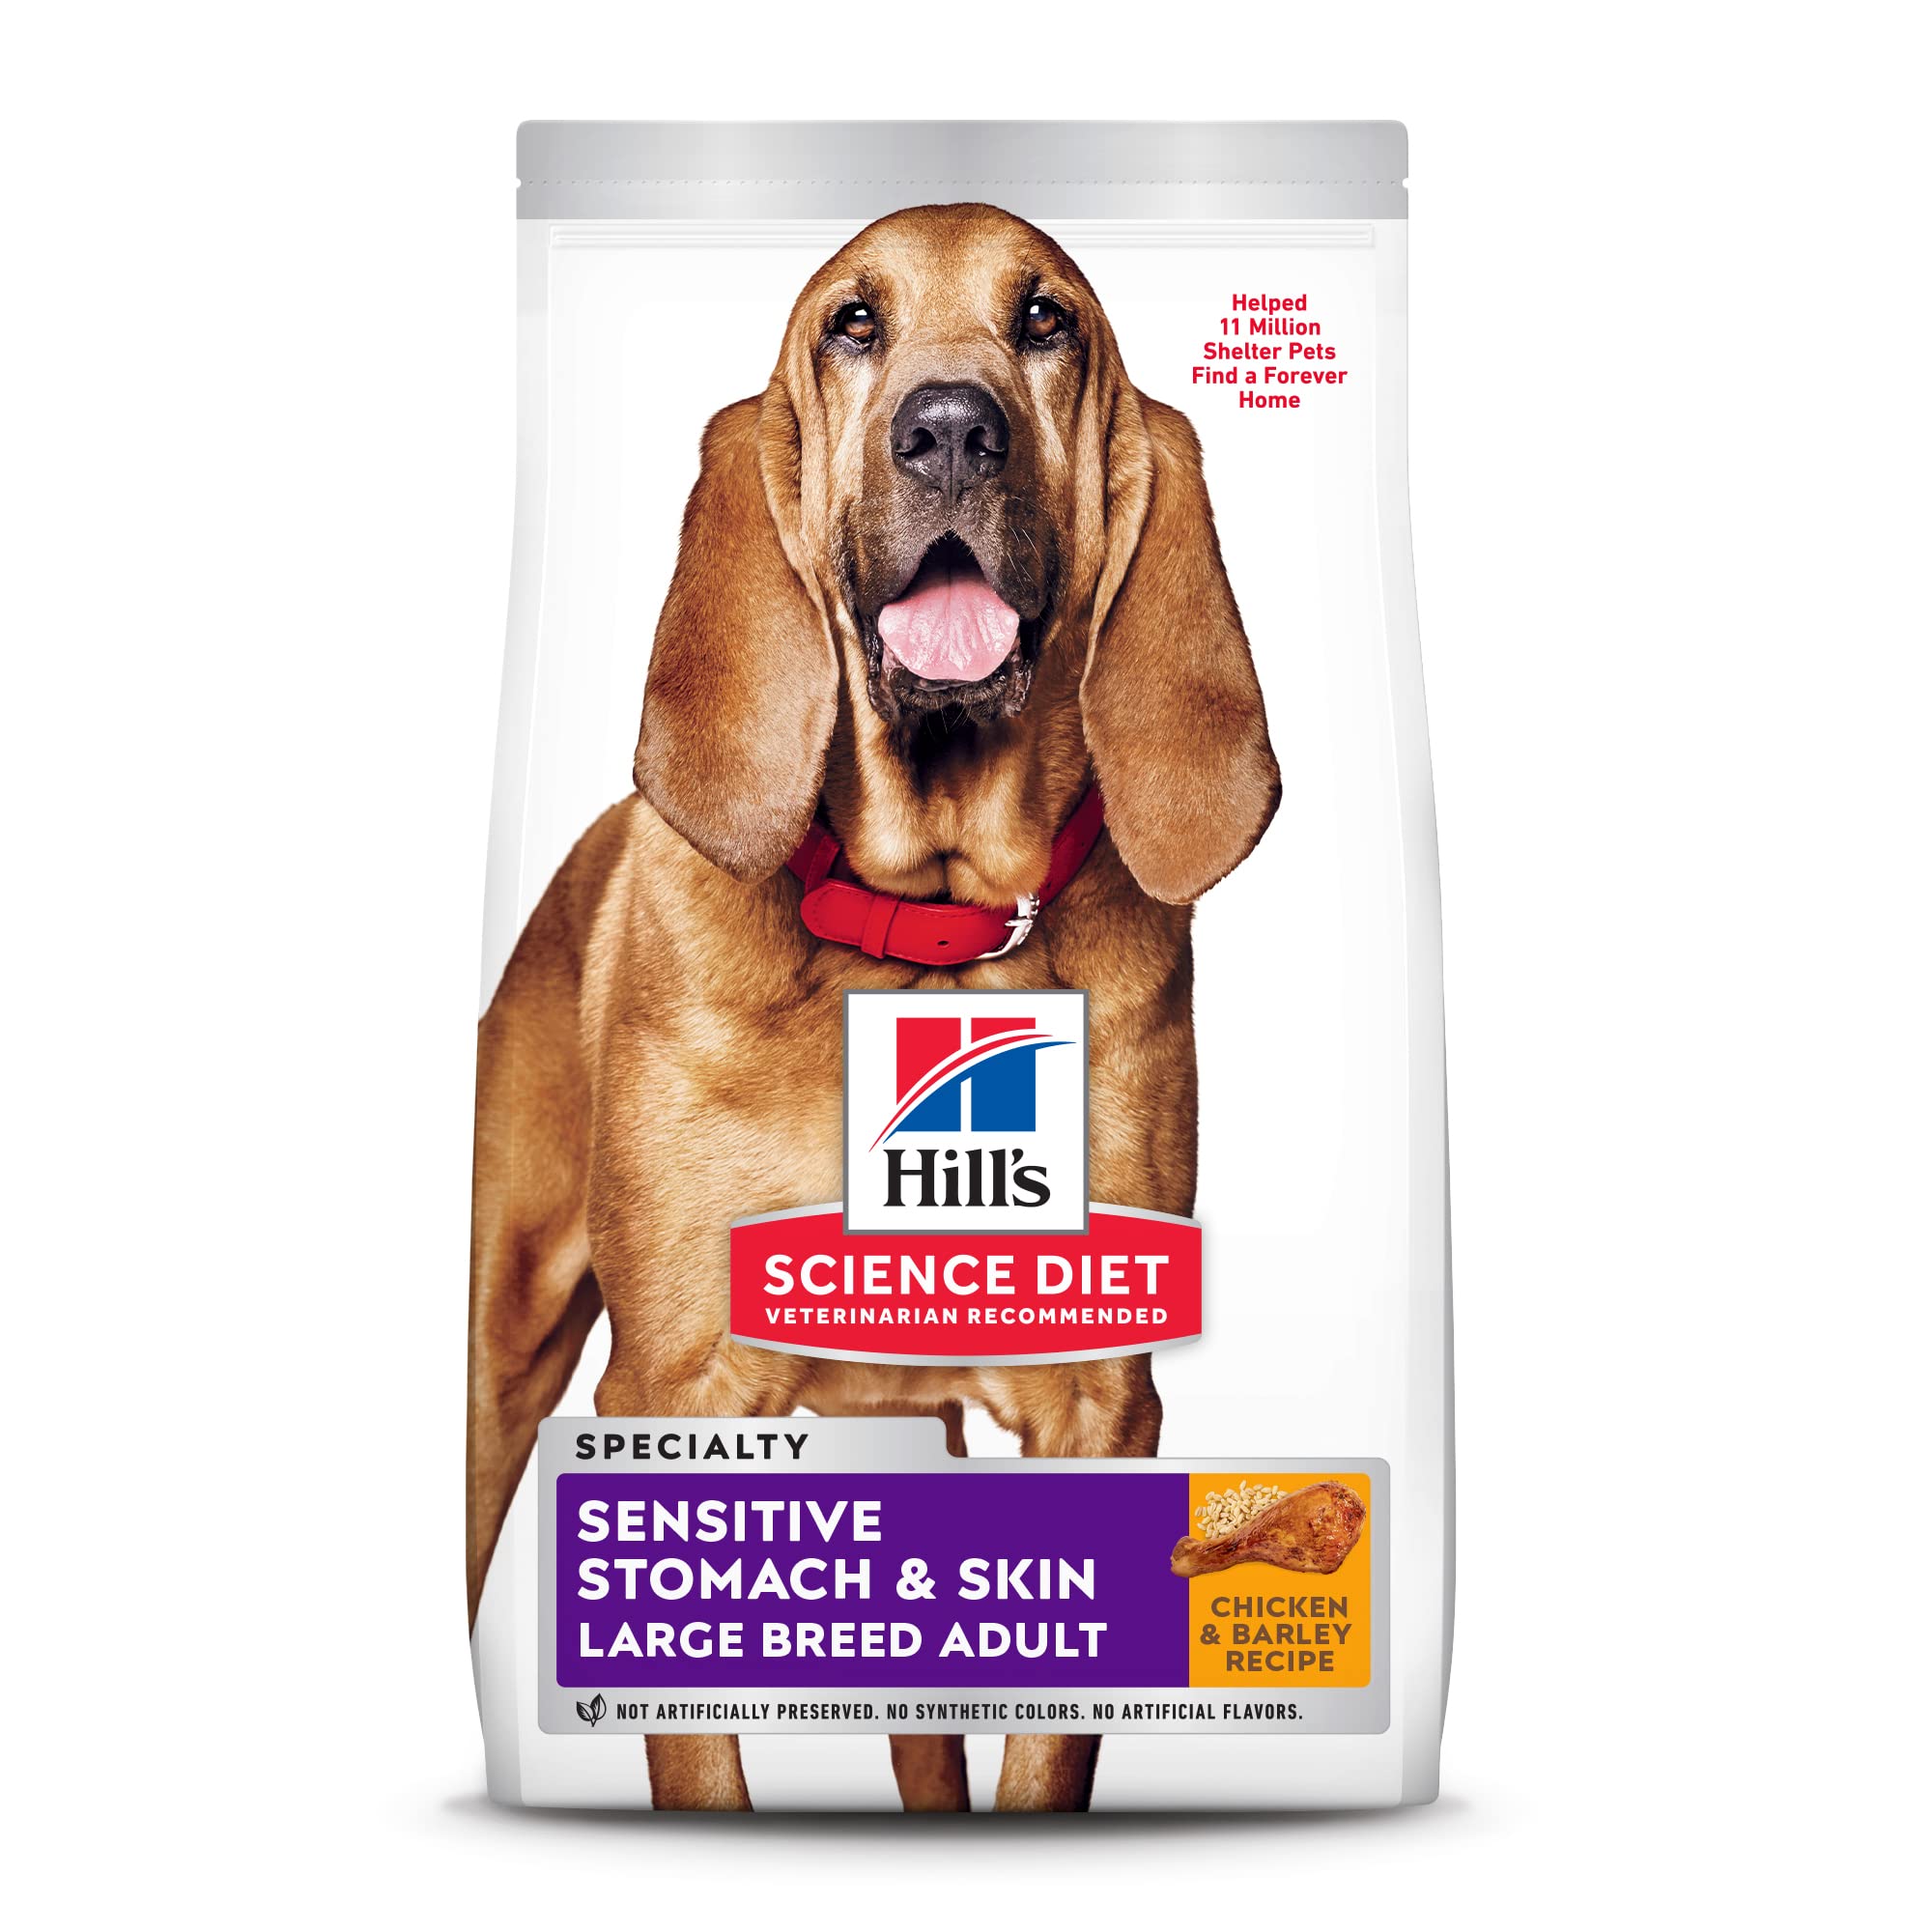 Hill's Science Diet 成人敏感肠胃和皮肤大型犬干狗粮，鸡肉配方，30 磅袋装...